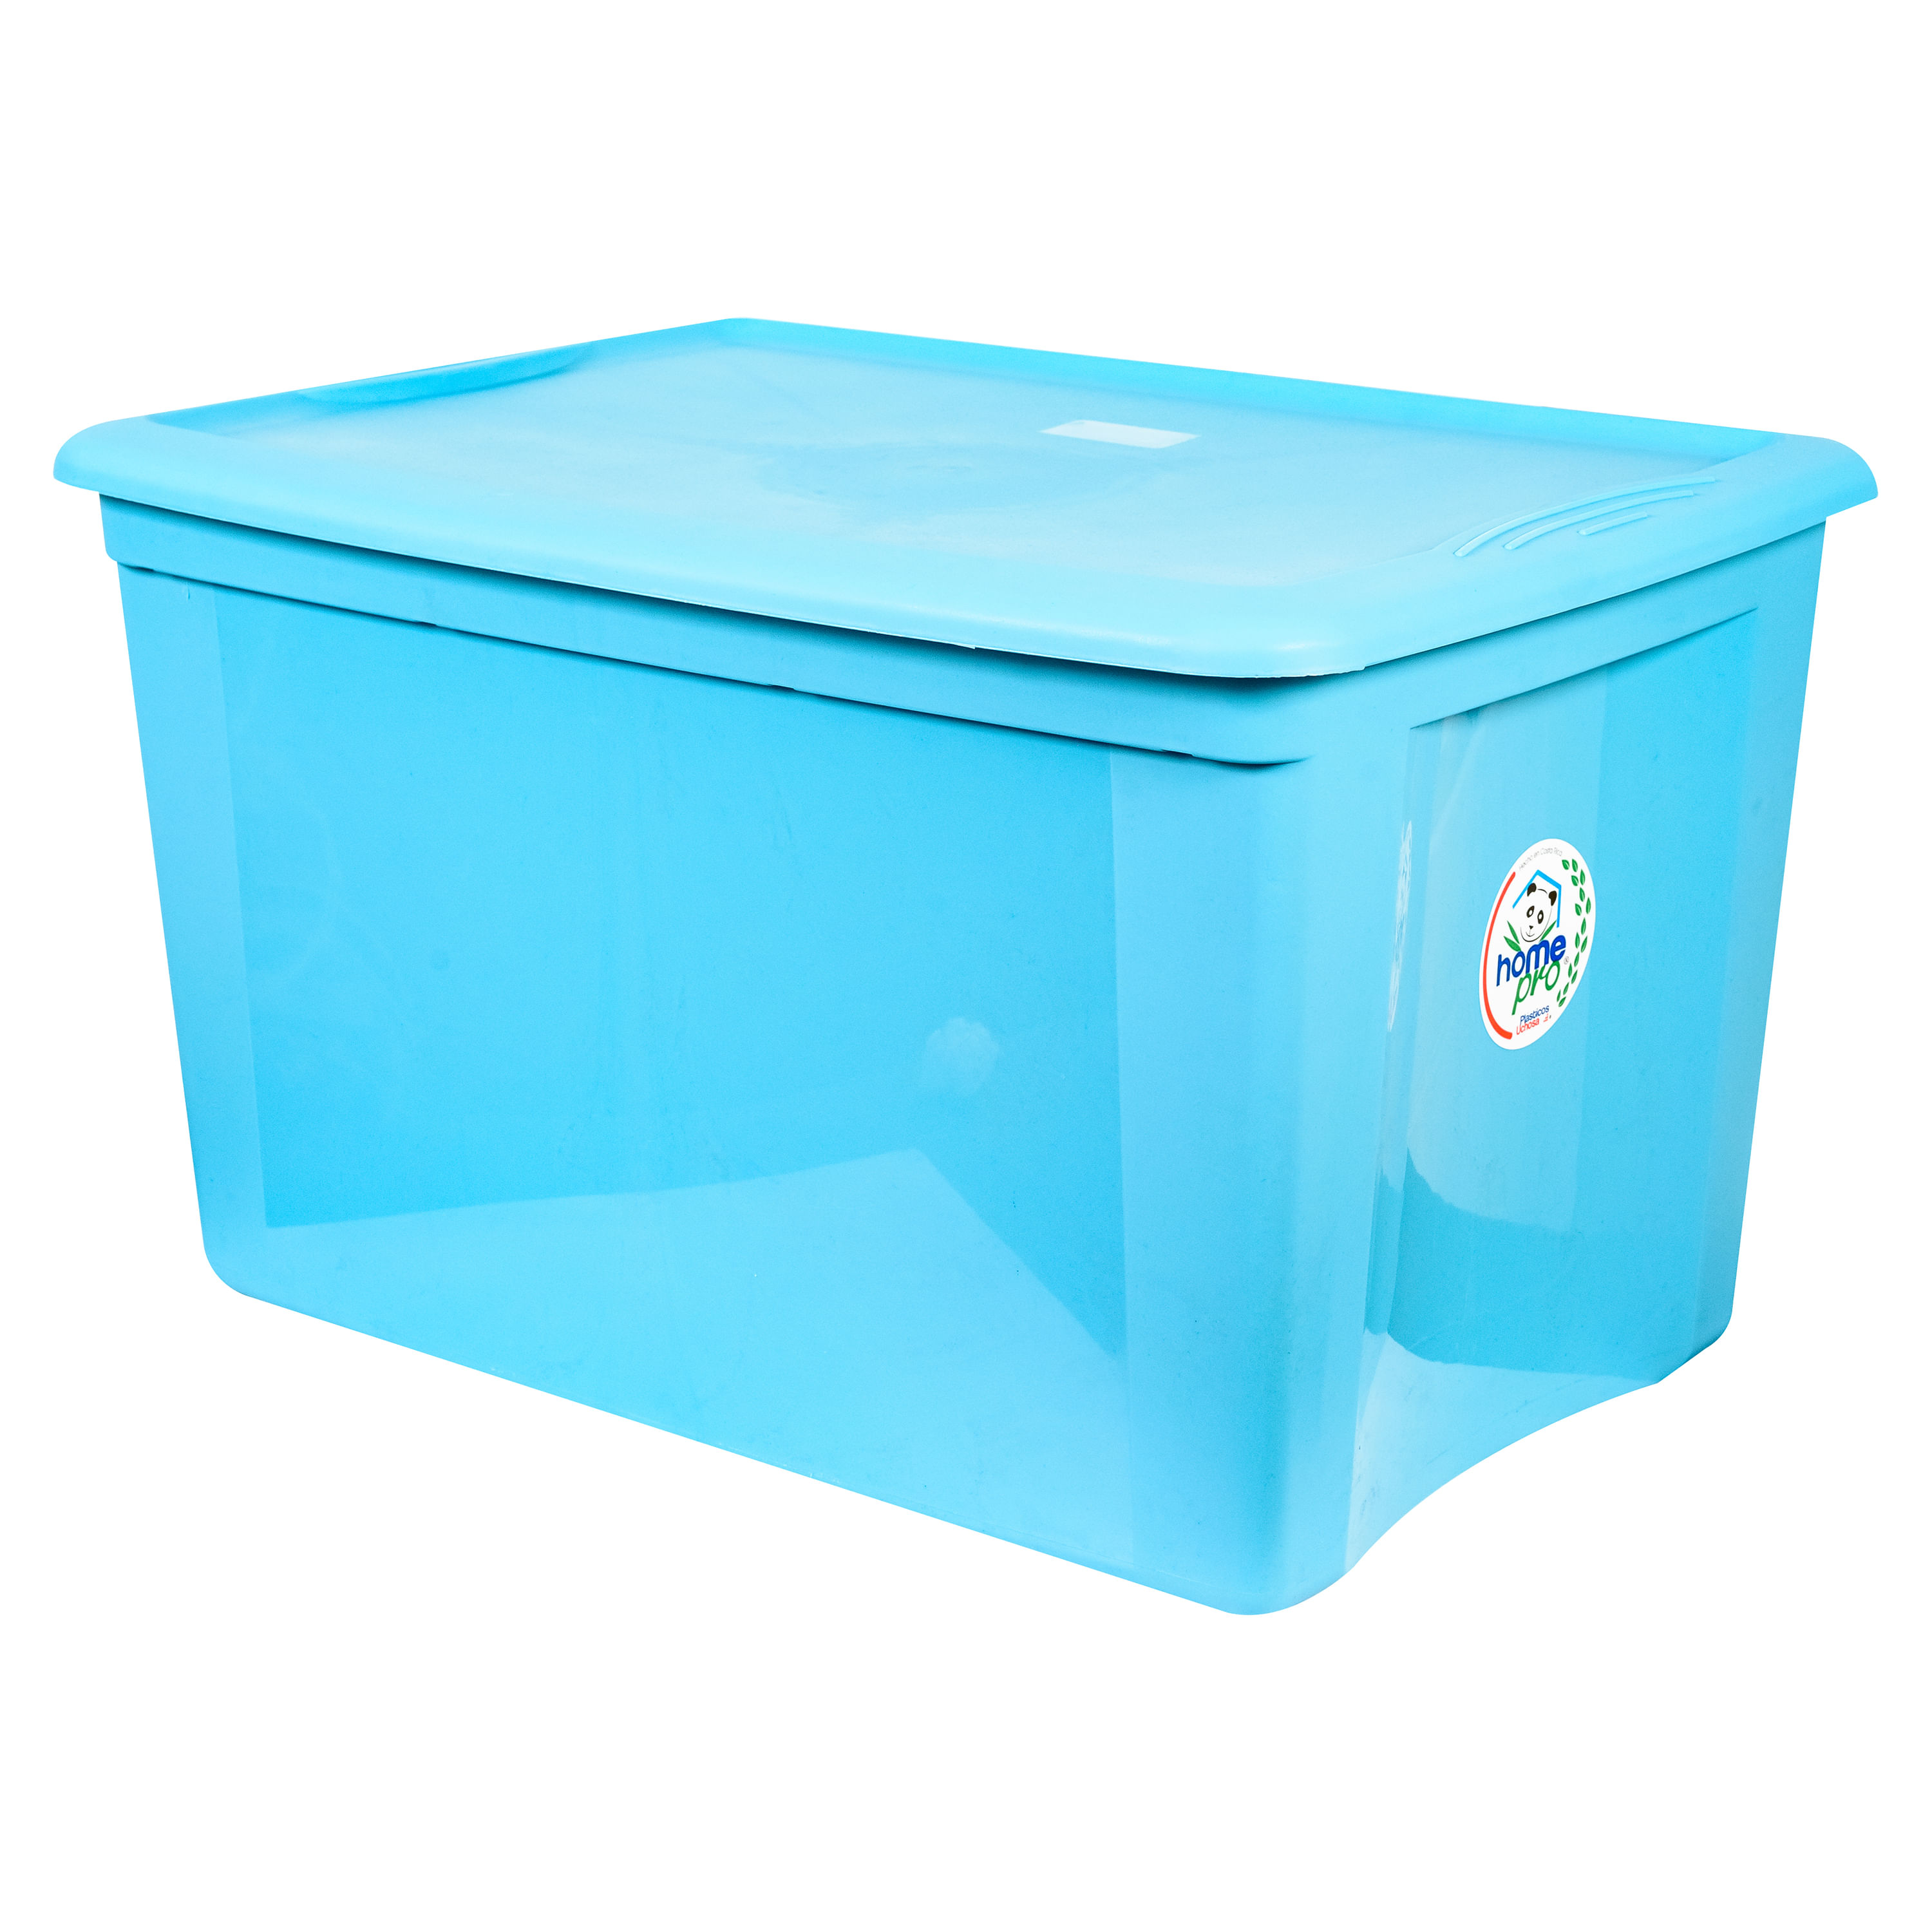 Denox - Caja transparente Eurobox 60 litros con ruedas y tapa azul. - Mazan